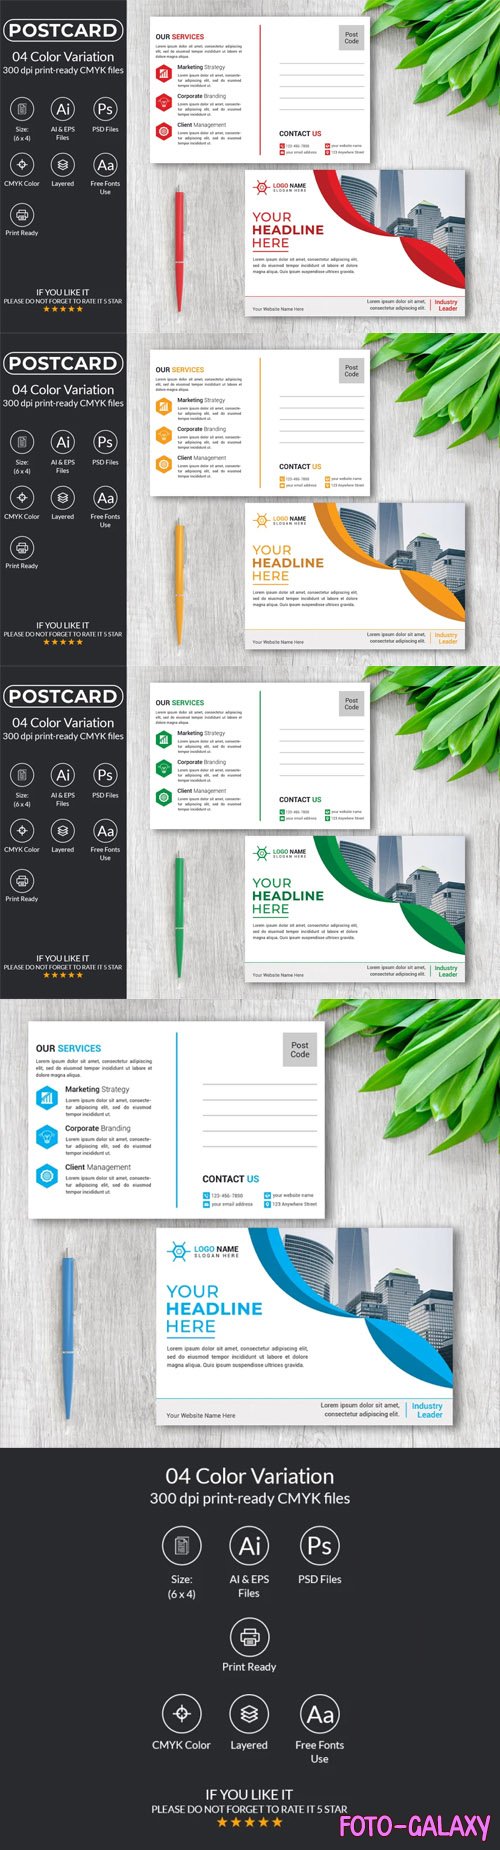 Corporate Postcard Design Templates for Illustrator & Photoshop